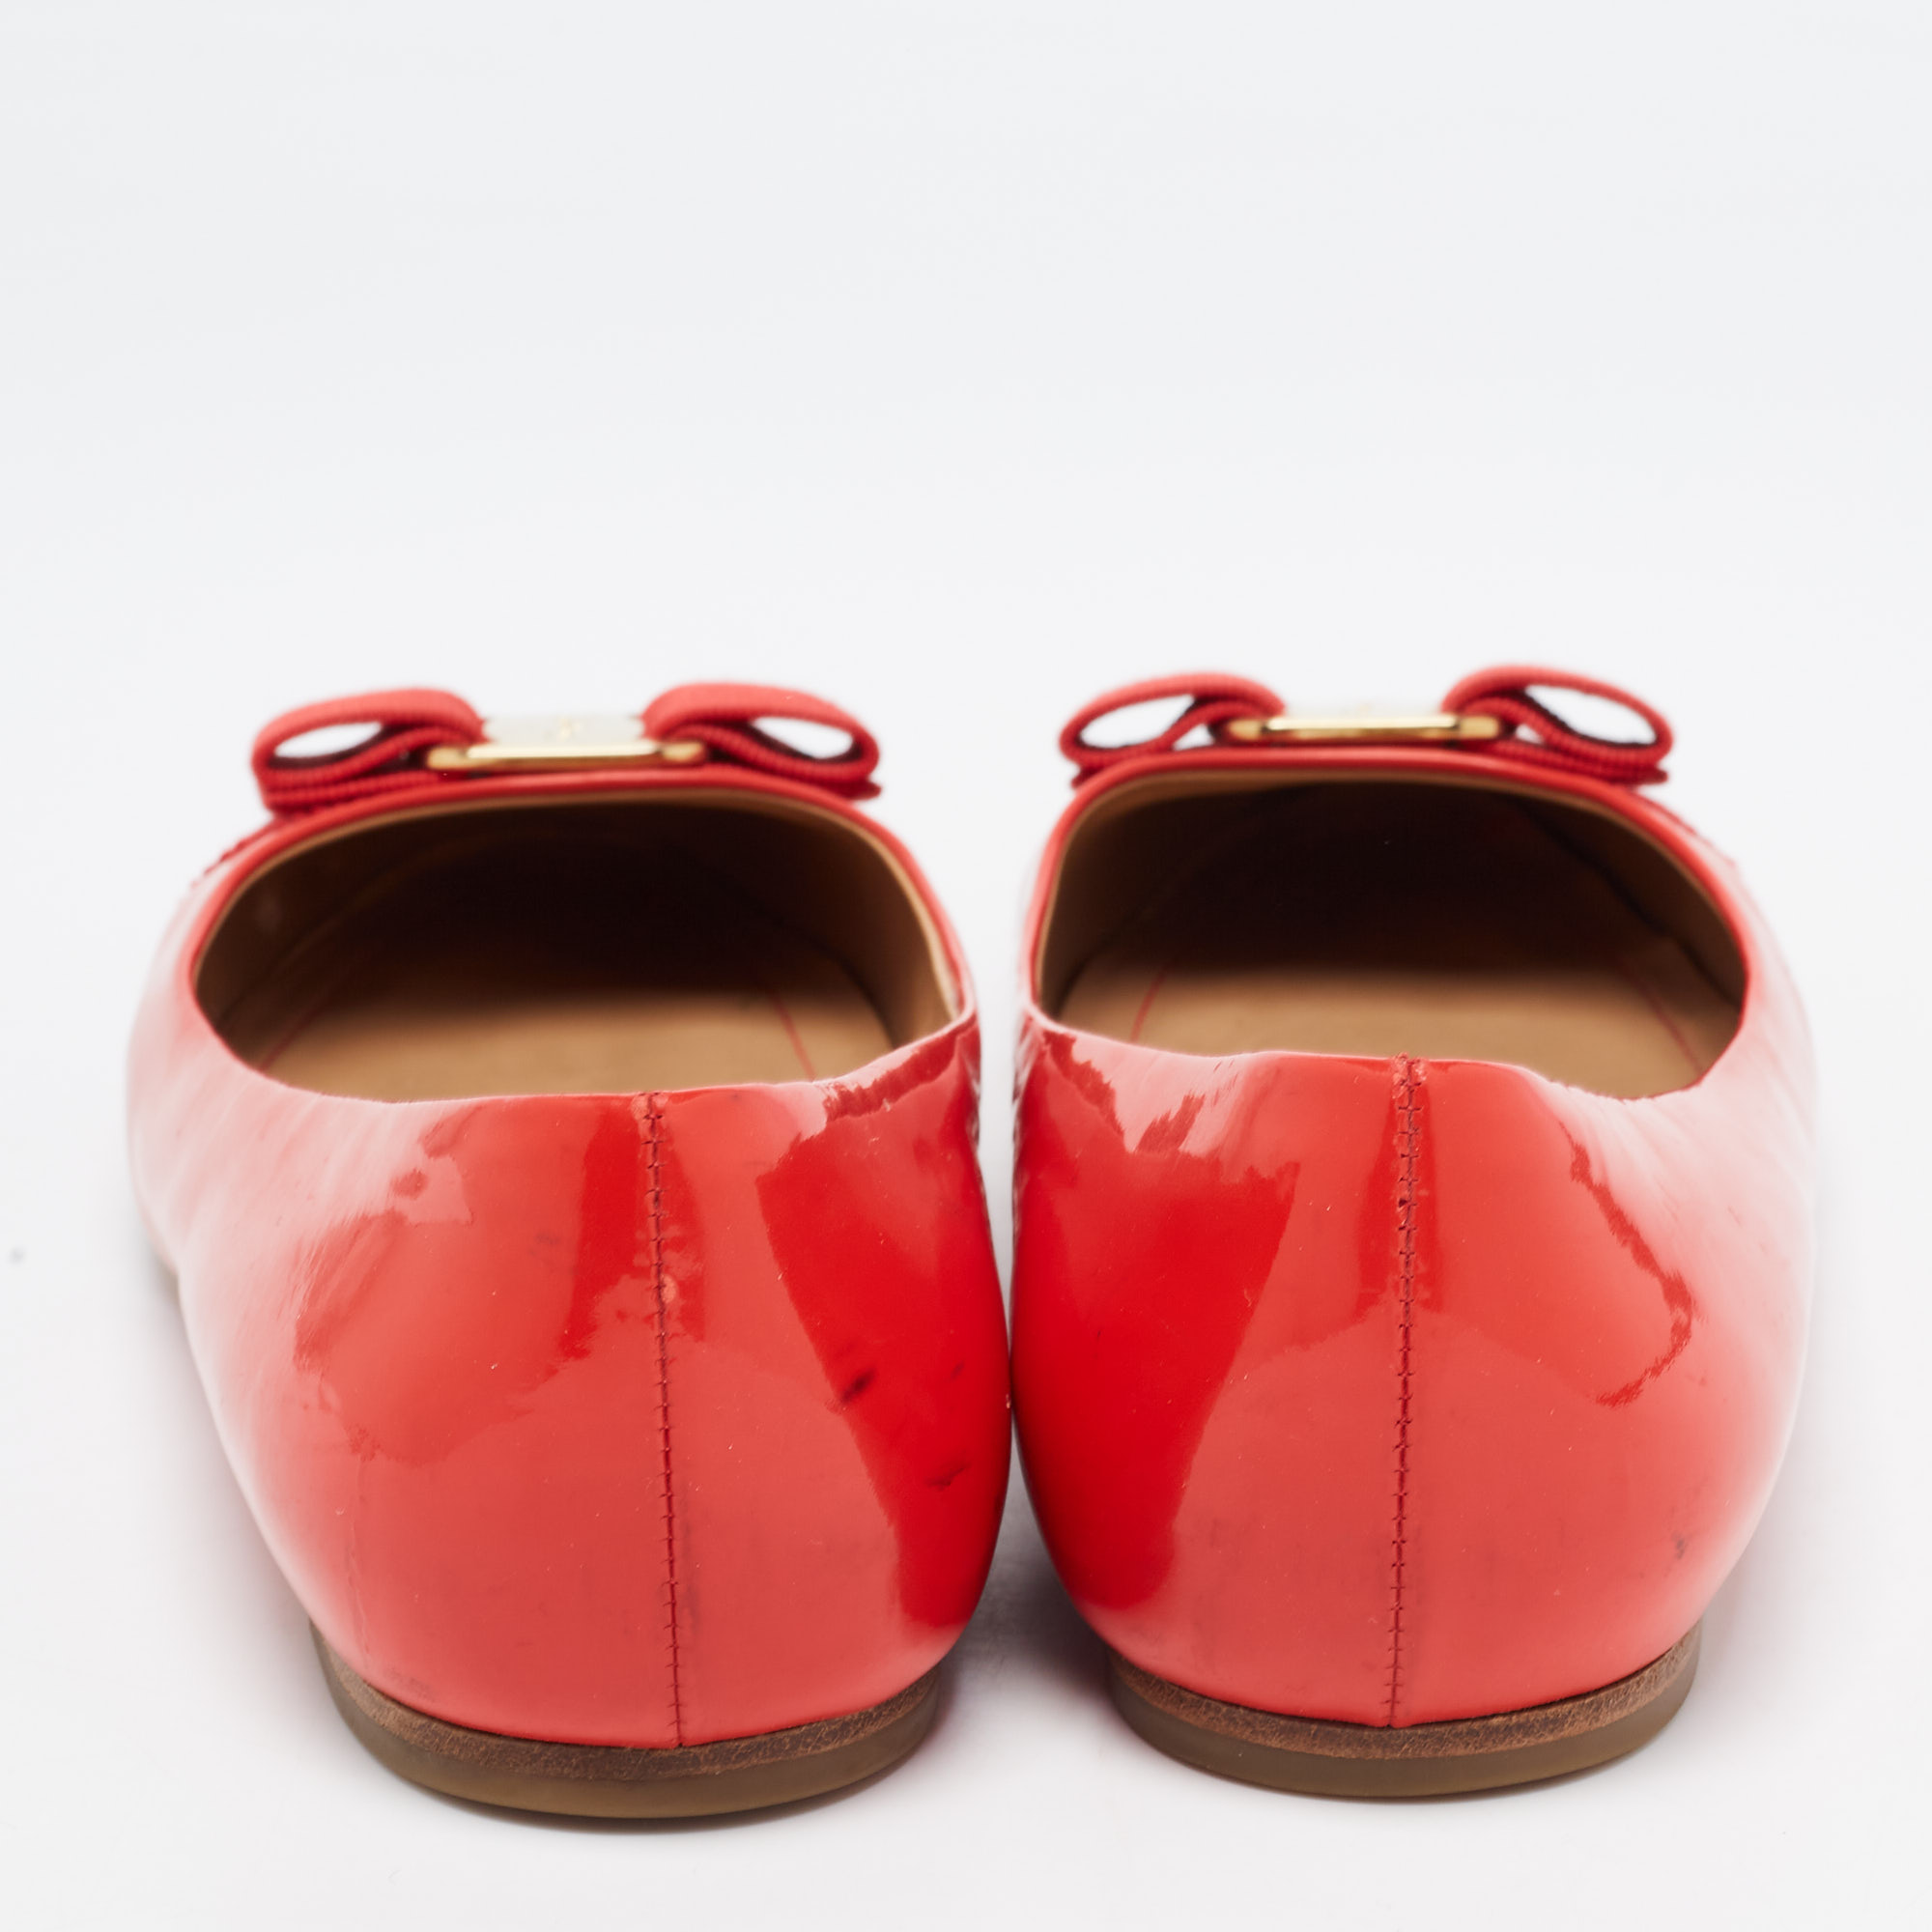 Salvatore Ferragamo Red Patent Leather Varina Ballet Flats Size 40